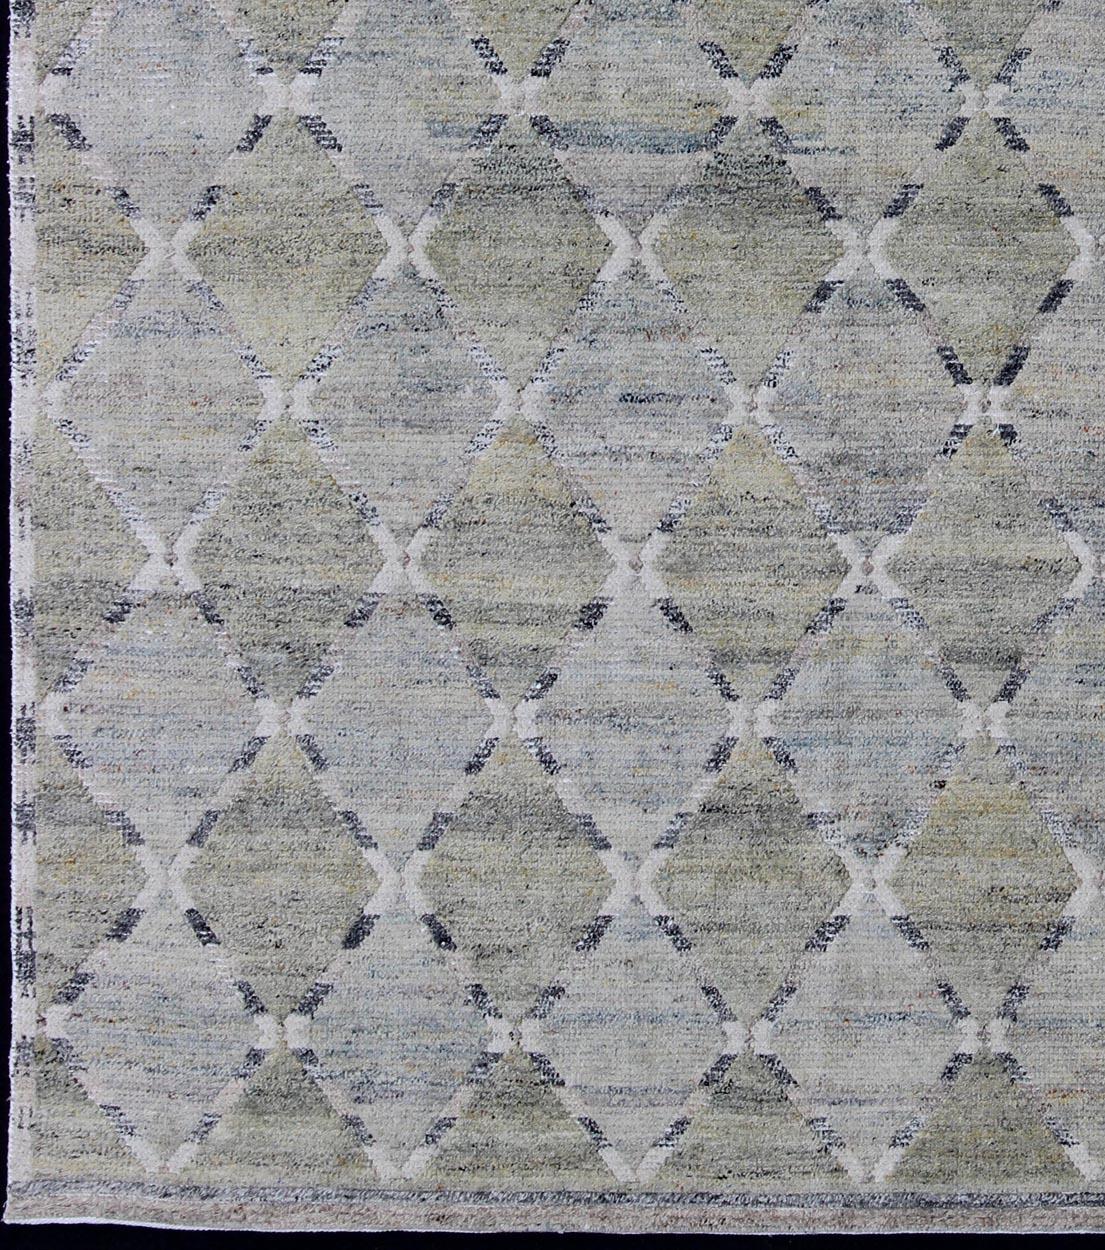 Gray geometric latticework pattern modern Scandinavian piled rug in neutral tones, rug rjk-16354-shb-008-pile, country of origin / type: India / Scandinavian flat-weave

This Scandinavian flat-weave is inspired by the work of Swedish textile